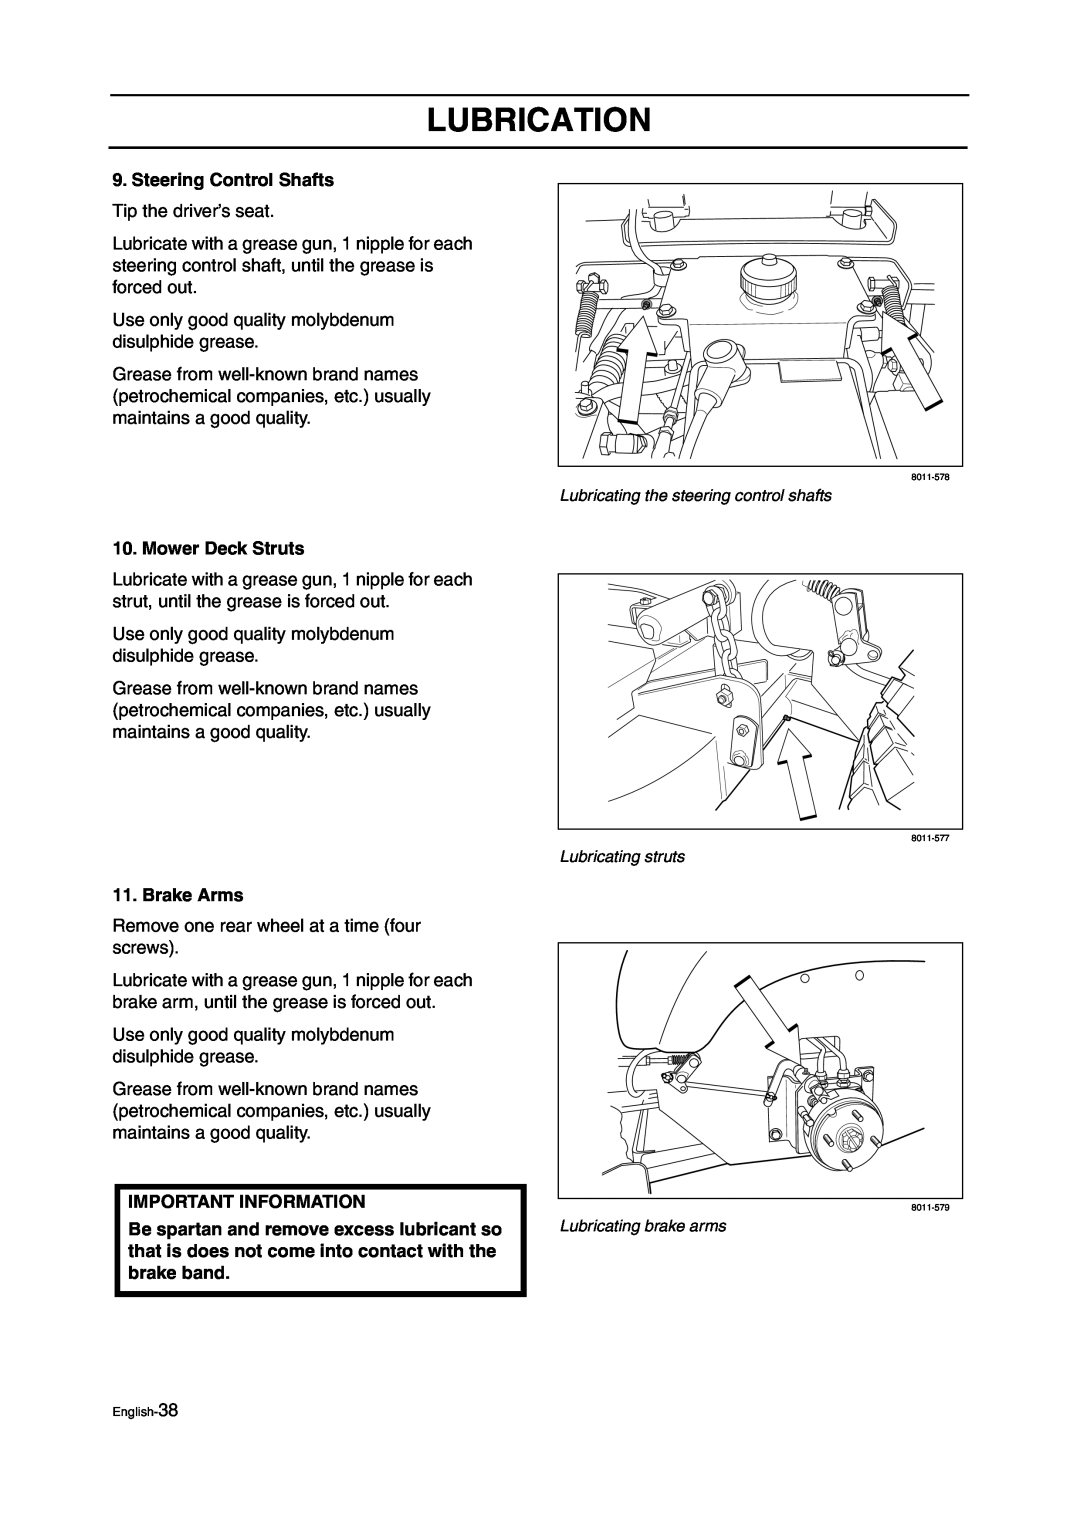 Husqvarna ZTH manual Steering Control Shafts, Mower Deck Struts, Brake Arms, Lubrication, Important Information 